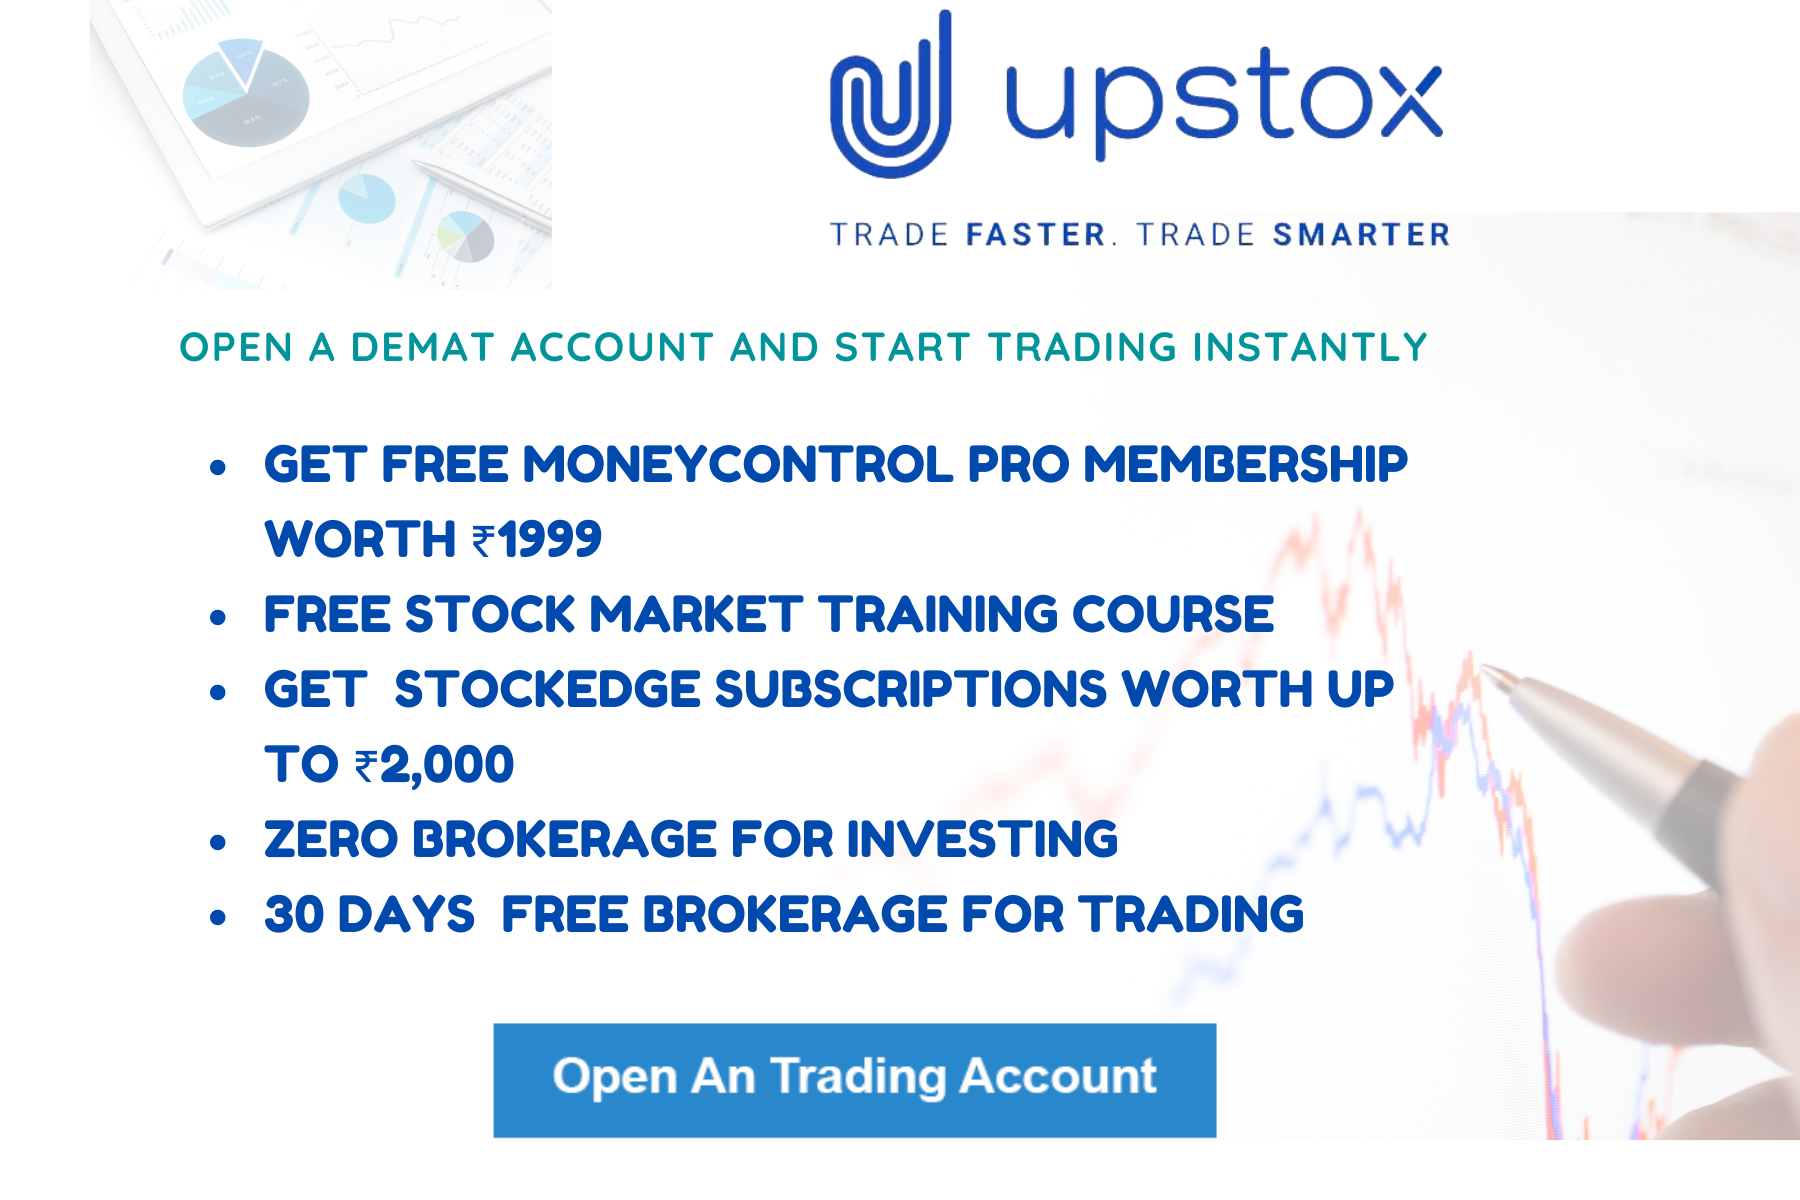 upstox demat account - upstox offer